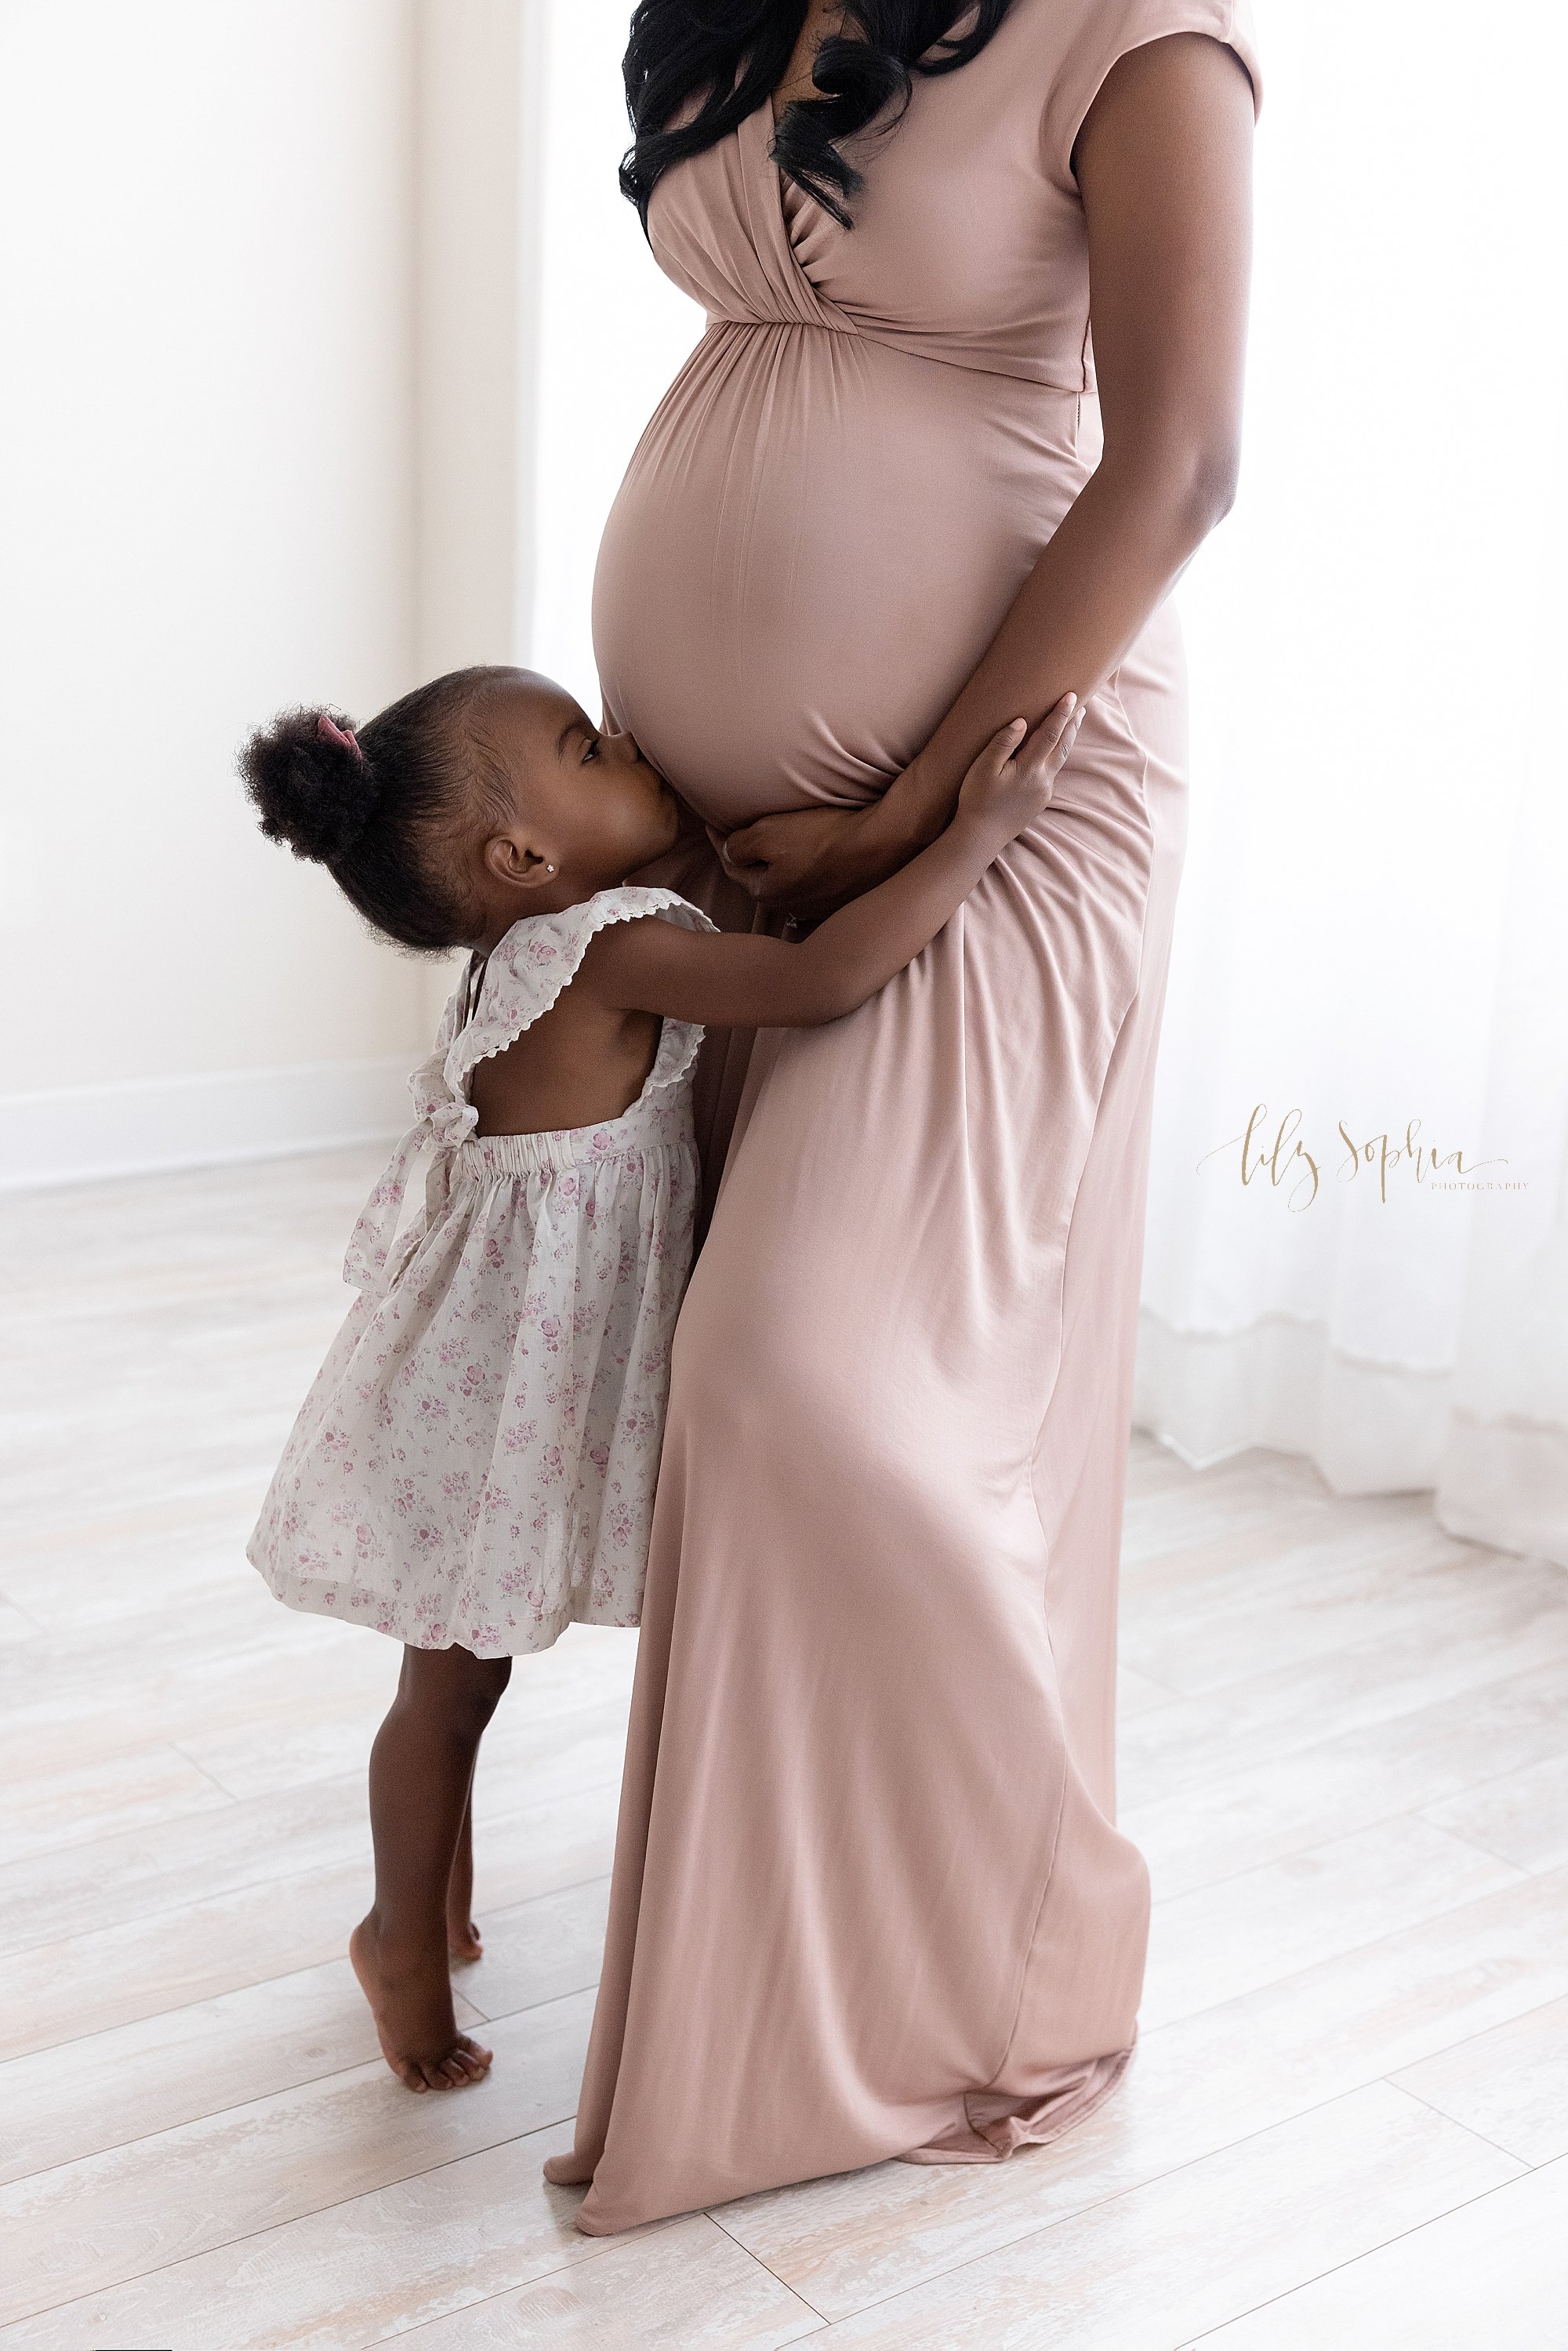 intown-atlanta-decatur-buckhead-maternity-black-couple-studio-family-photoshoot-pregnancy-pictures_3557.jpg